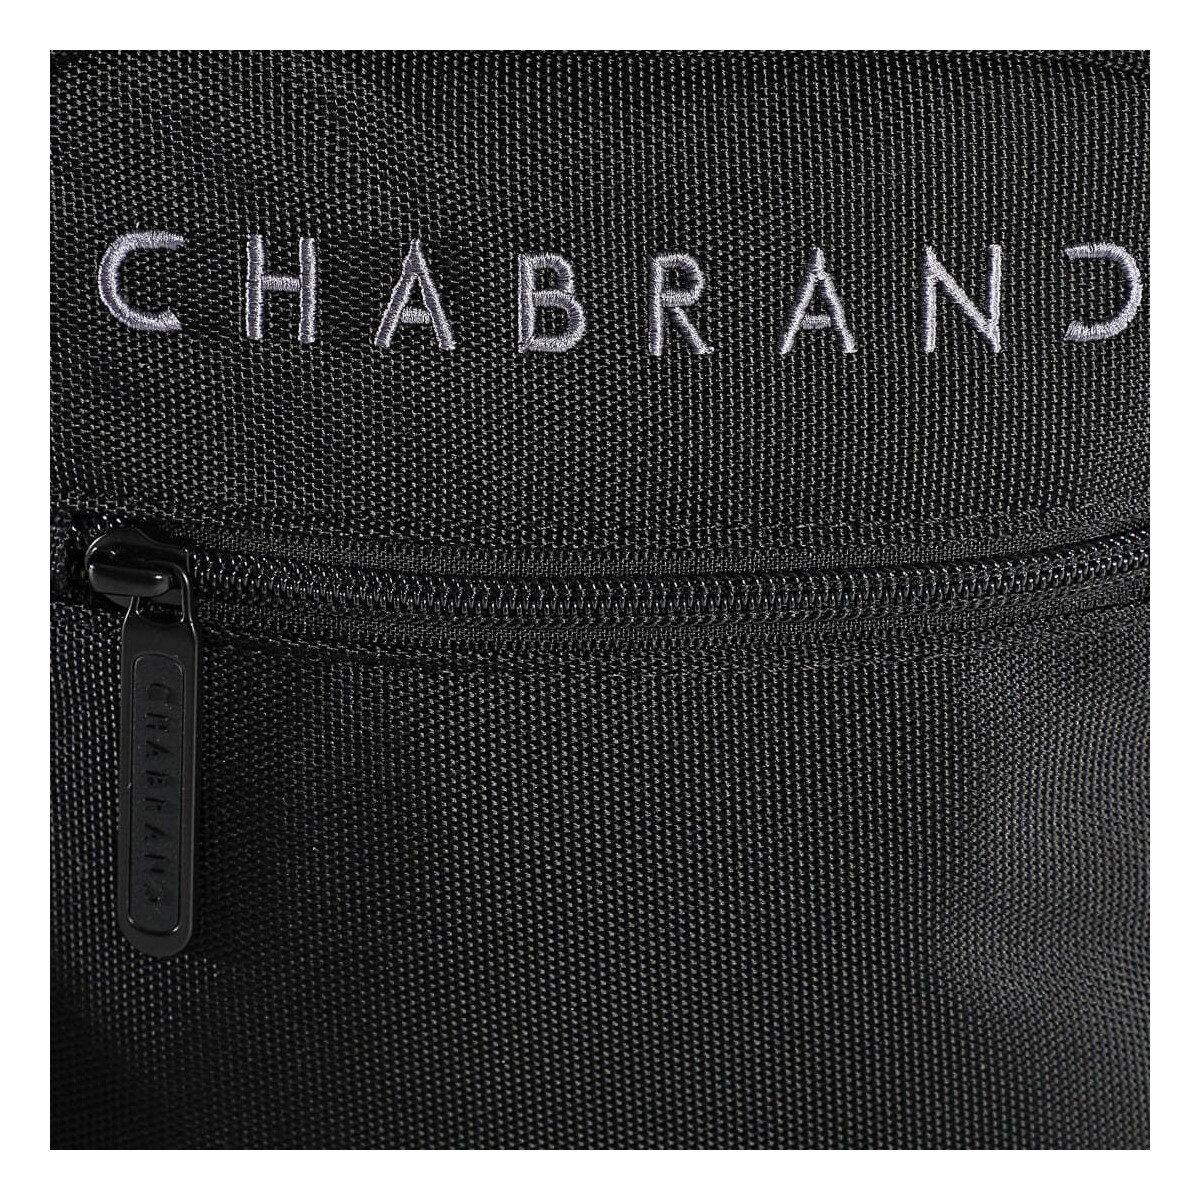 Chabrand Noir MINI-SACOCHE - HOLLY 58221110-Noir h7n8rVoI